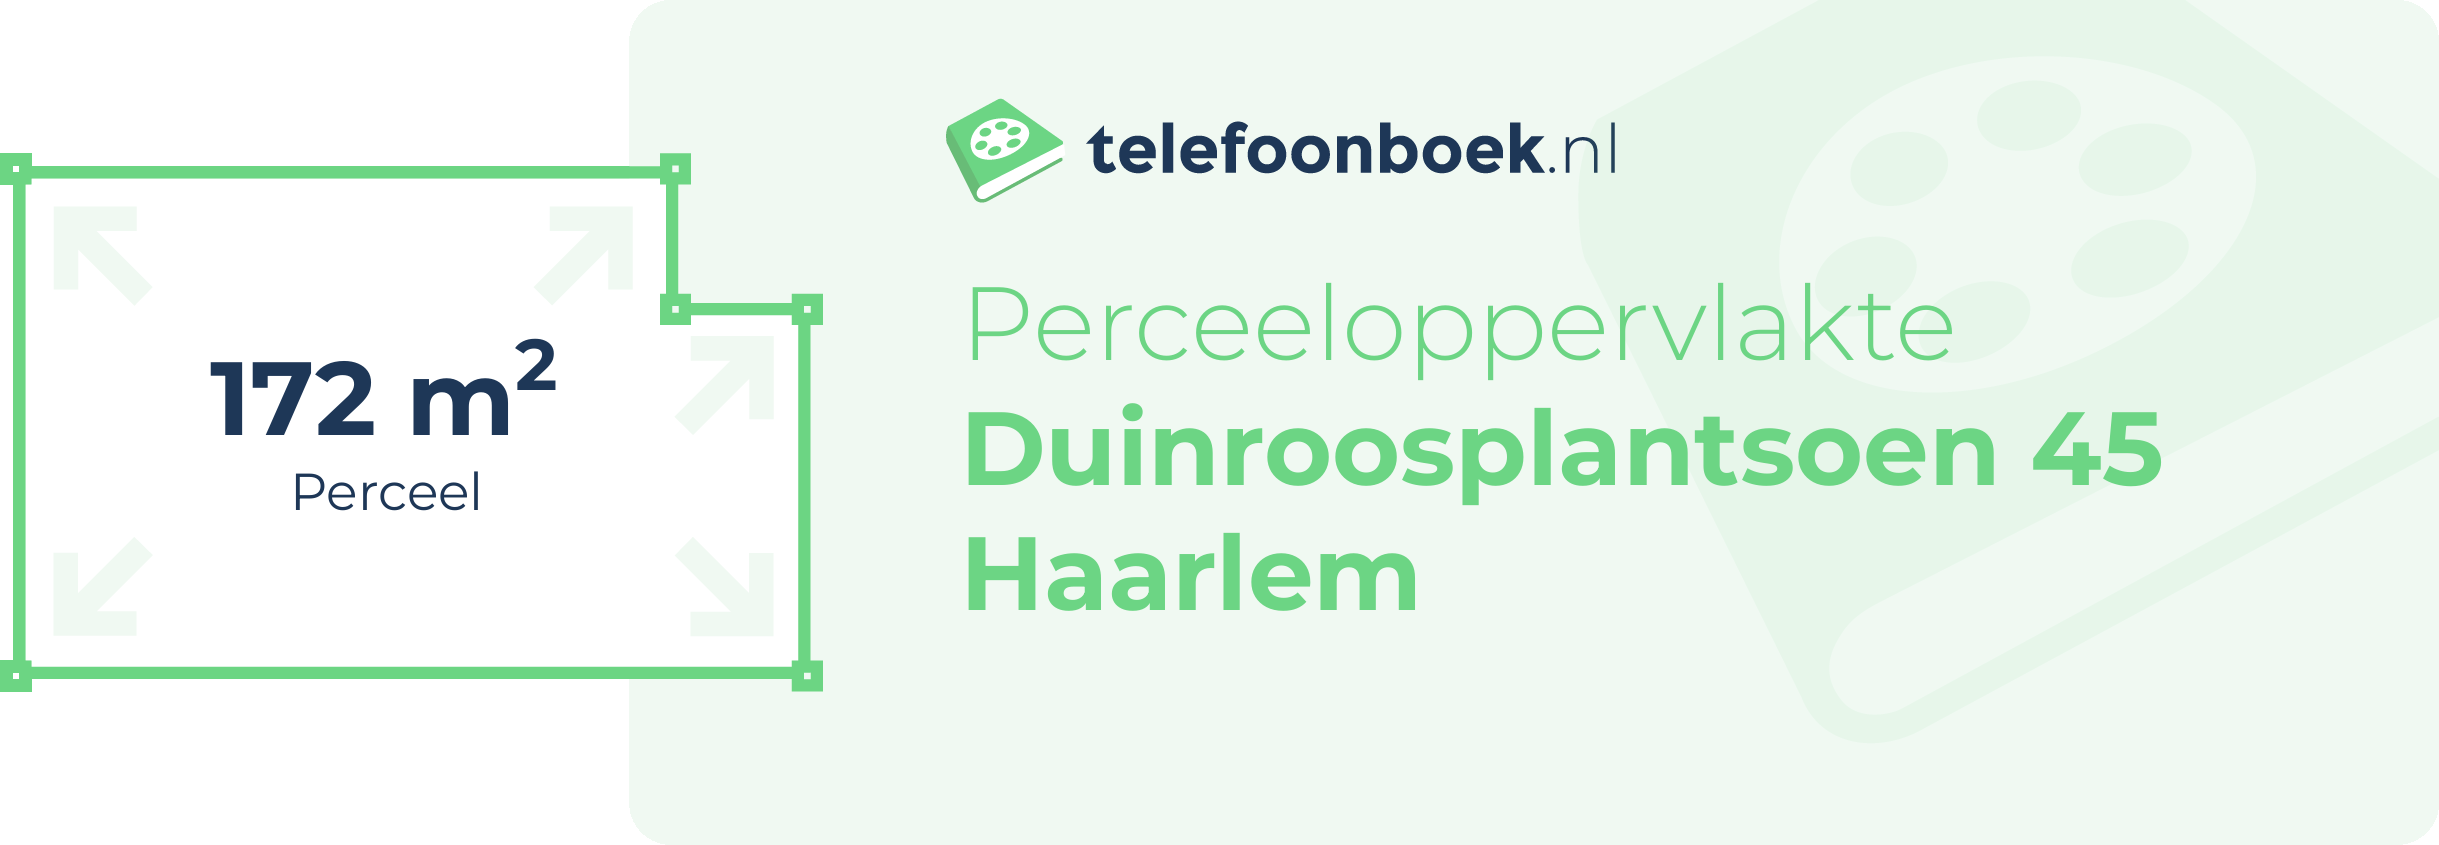 Perceeloppervlakte Duinroosplantsoen 45 Haarlem